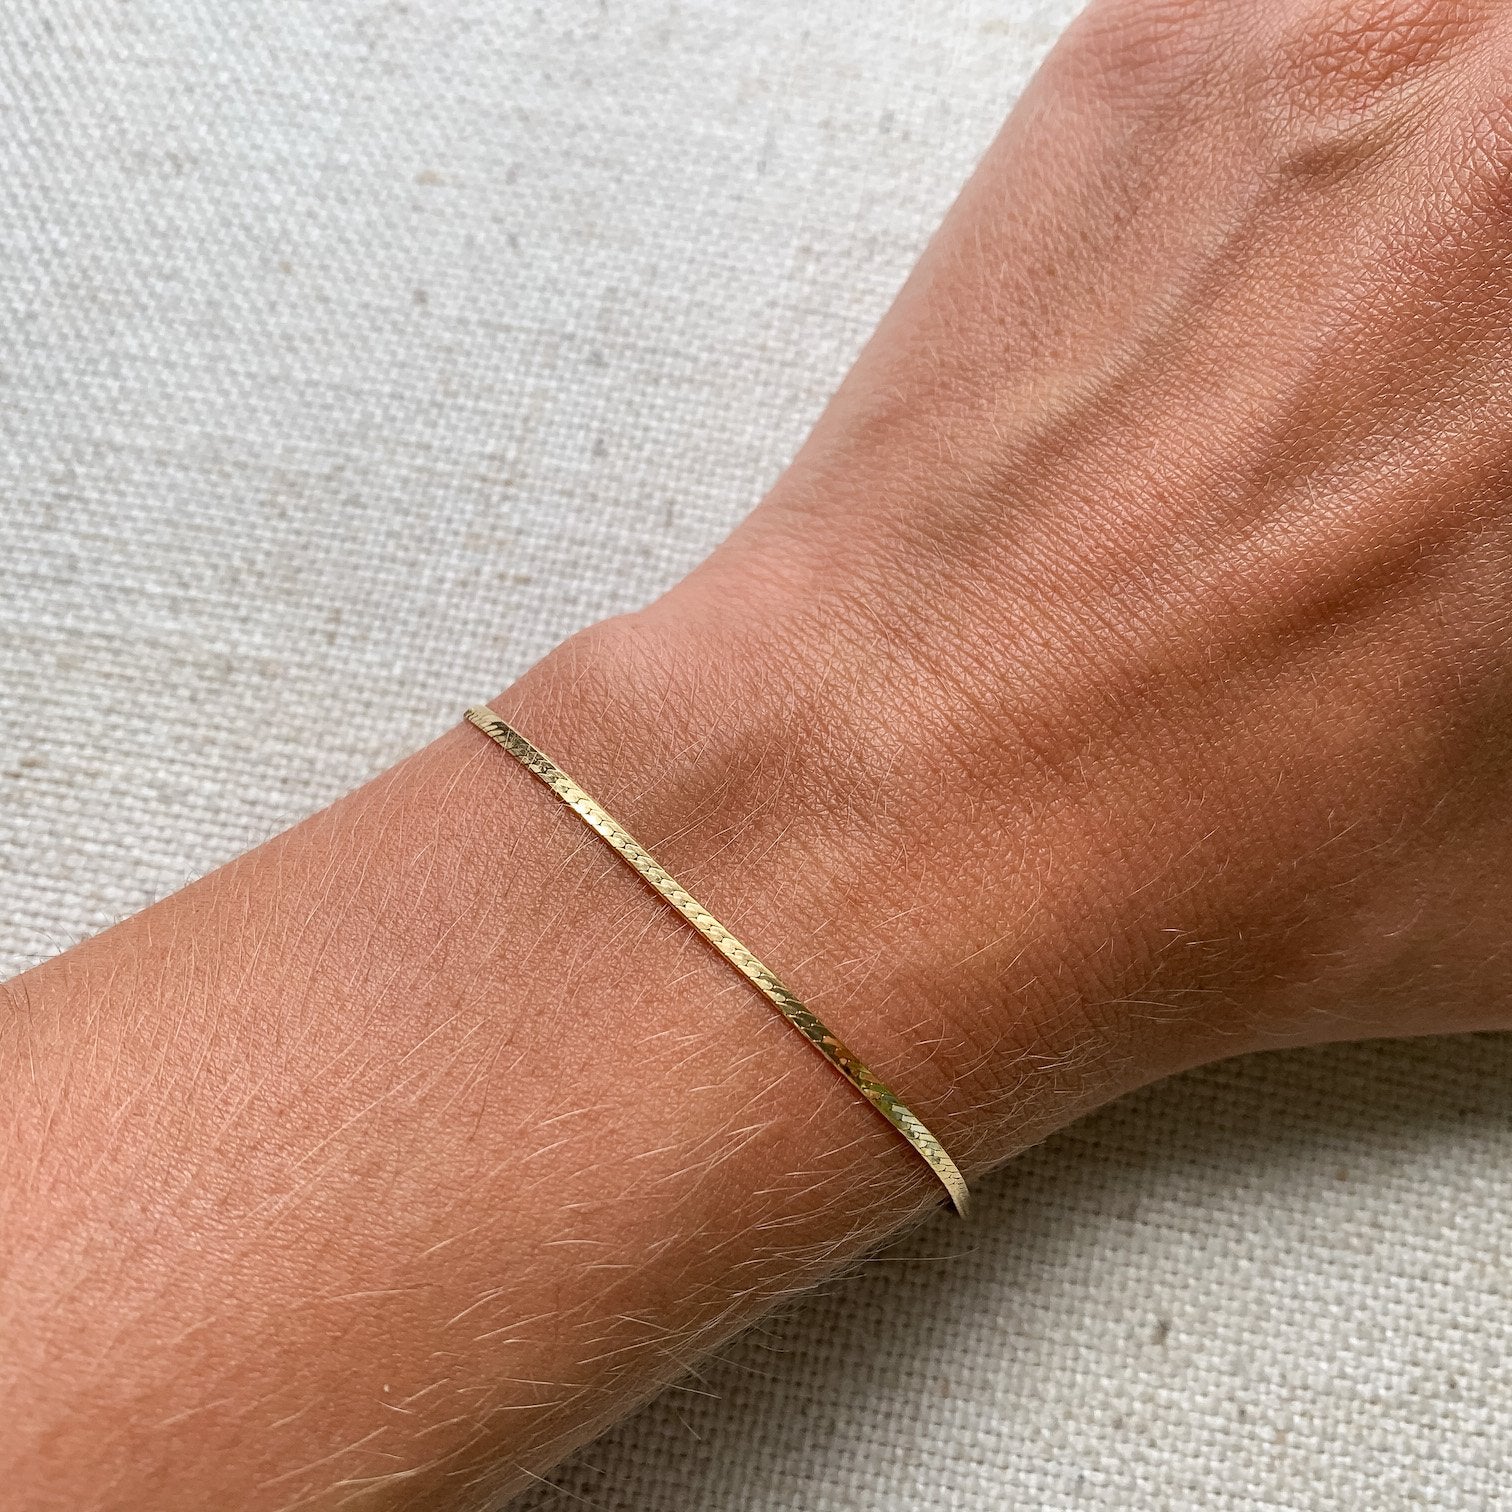 14k gold bracelet herringbone chain dainty elegant kemmi collection jewelry boho